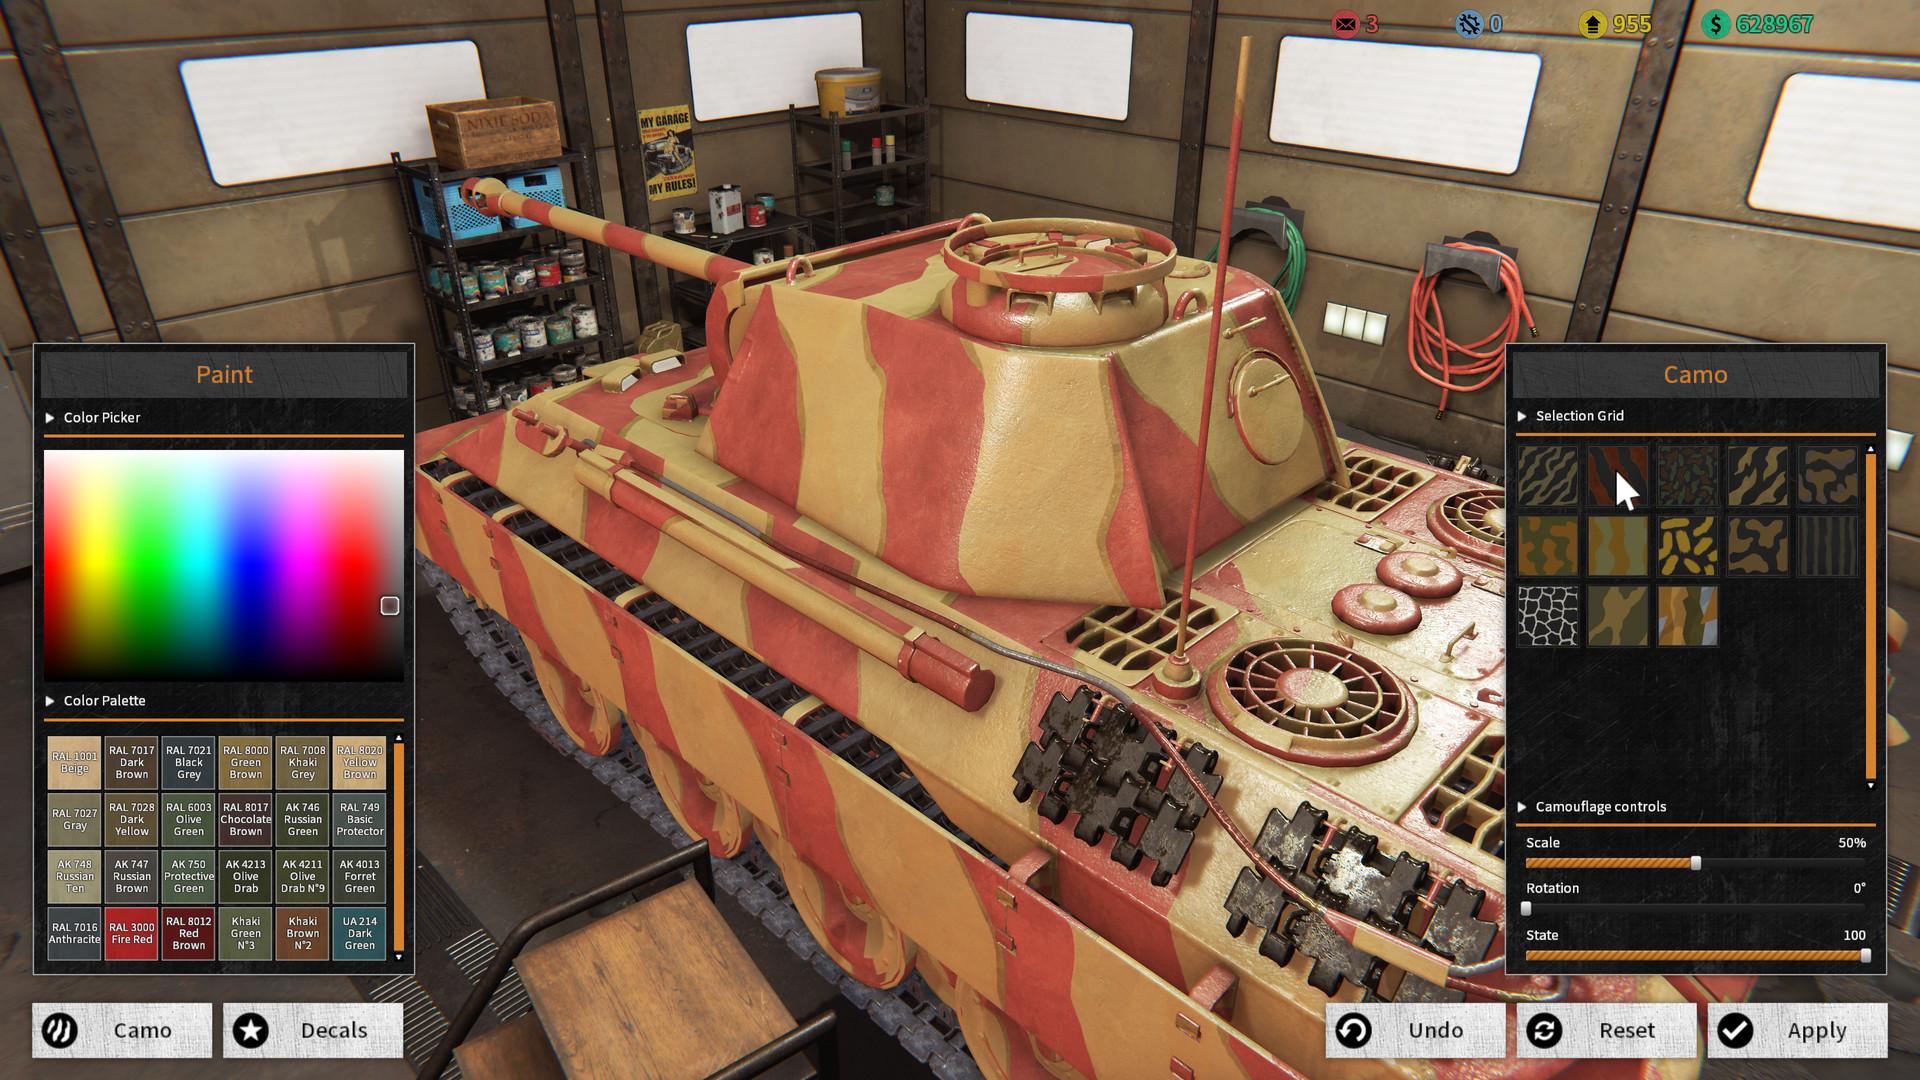 Screenshot №5 from game Tank Mechanic Simulator